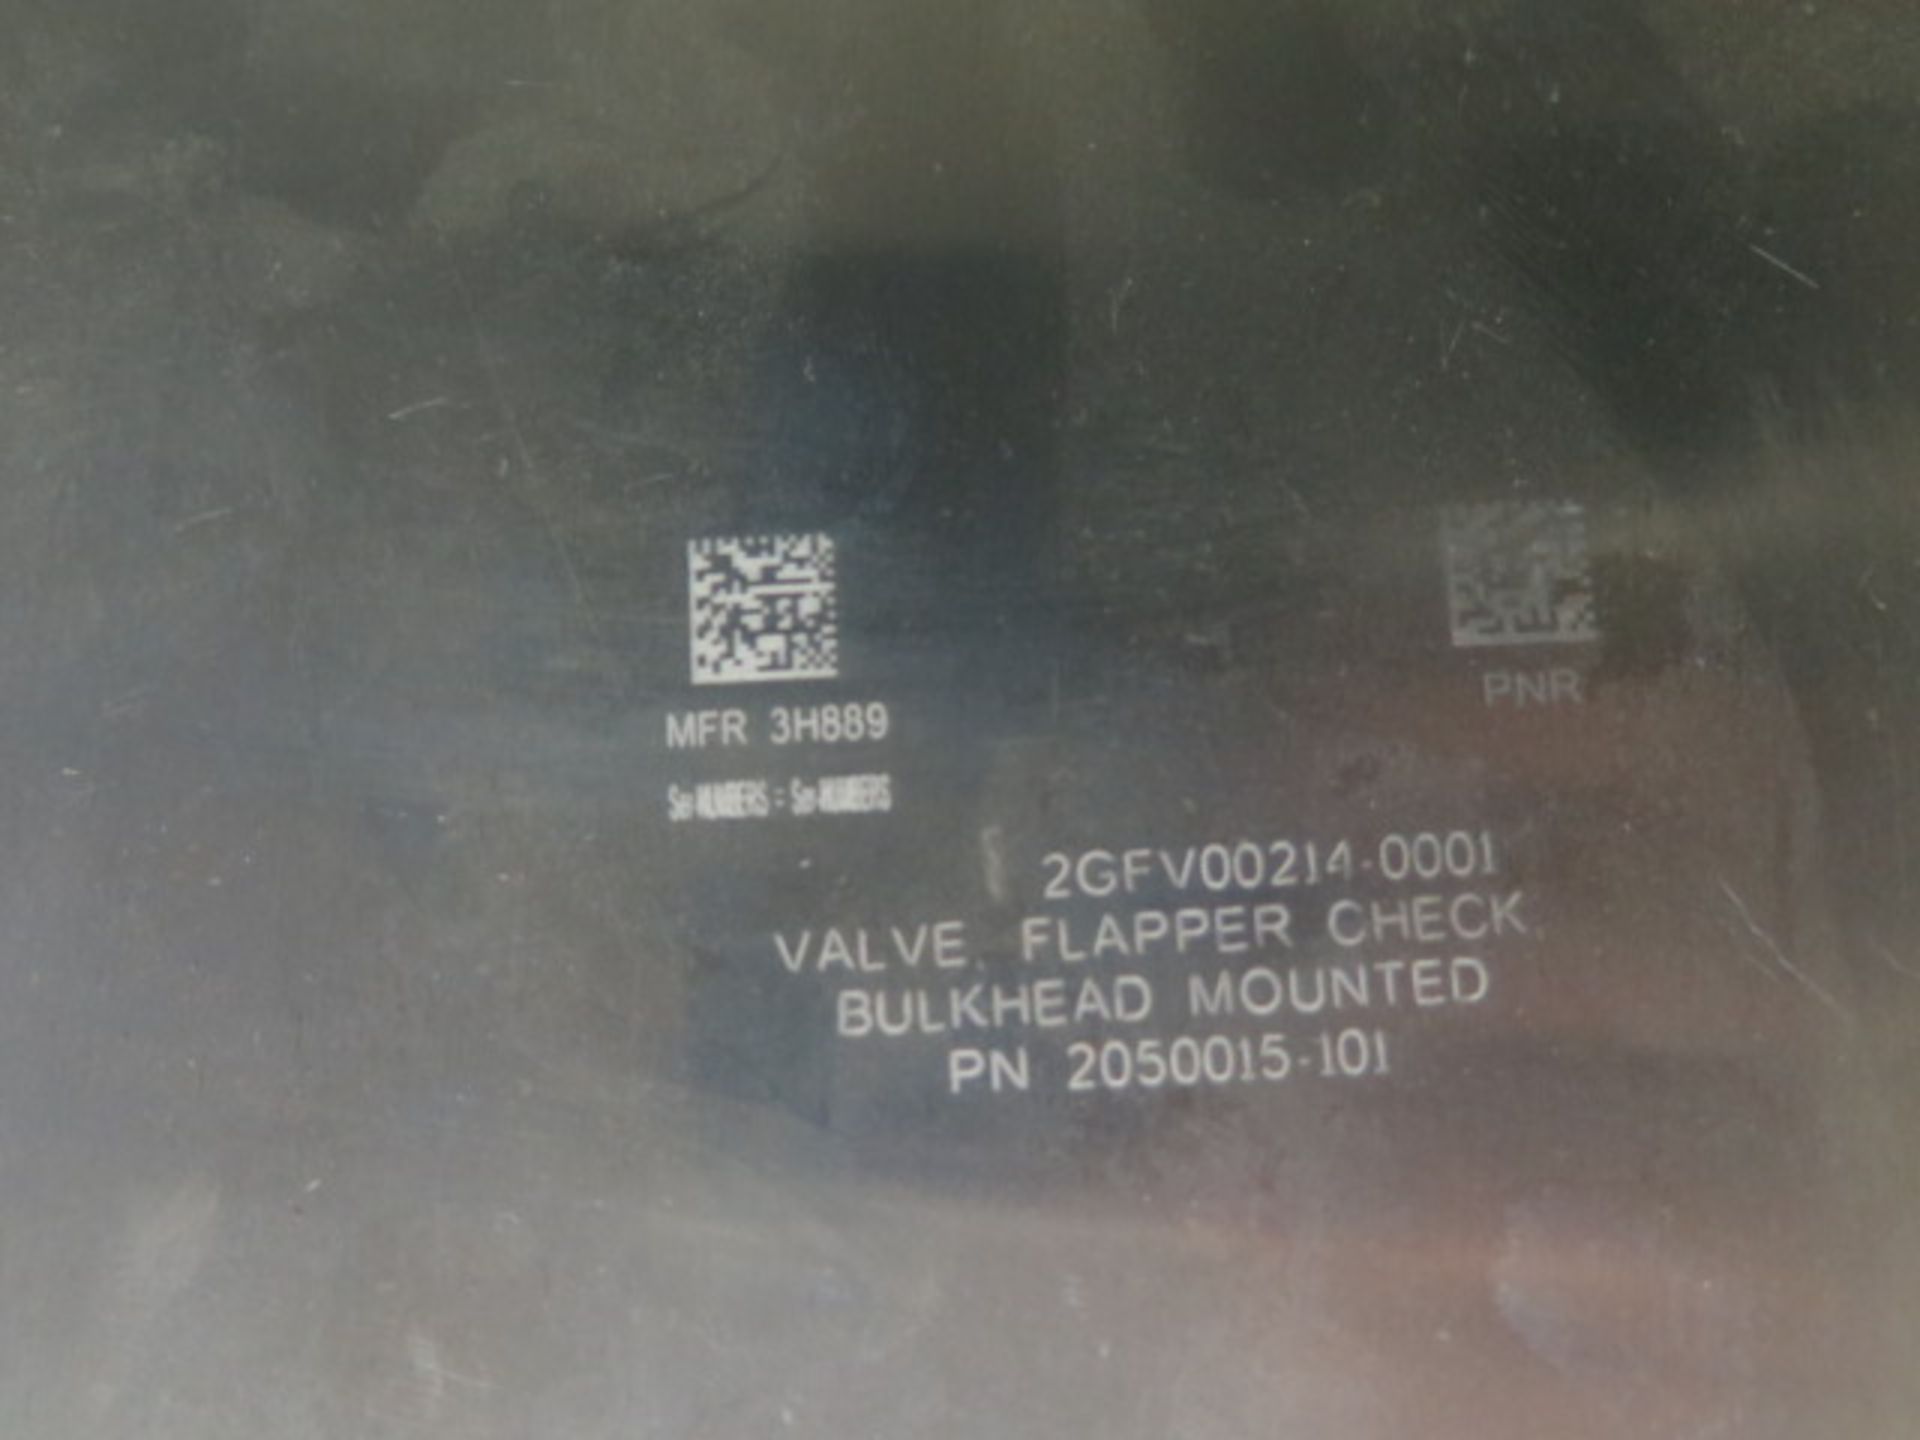 1998 – 2008 Refurbished CLC Control Laser Corp “Script 75” CNC Laser Engraving Machine s/n 272752951 - Image 7 of 14